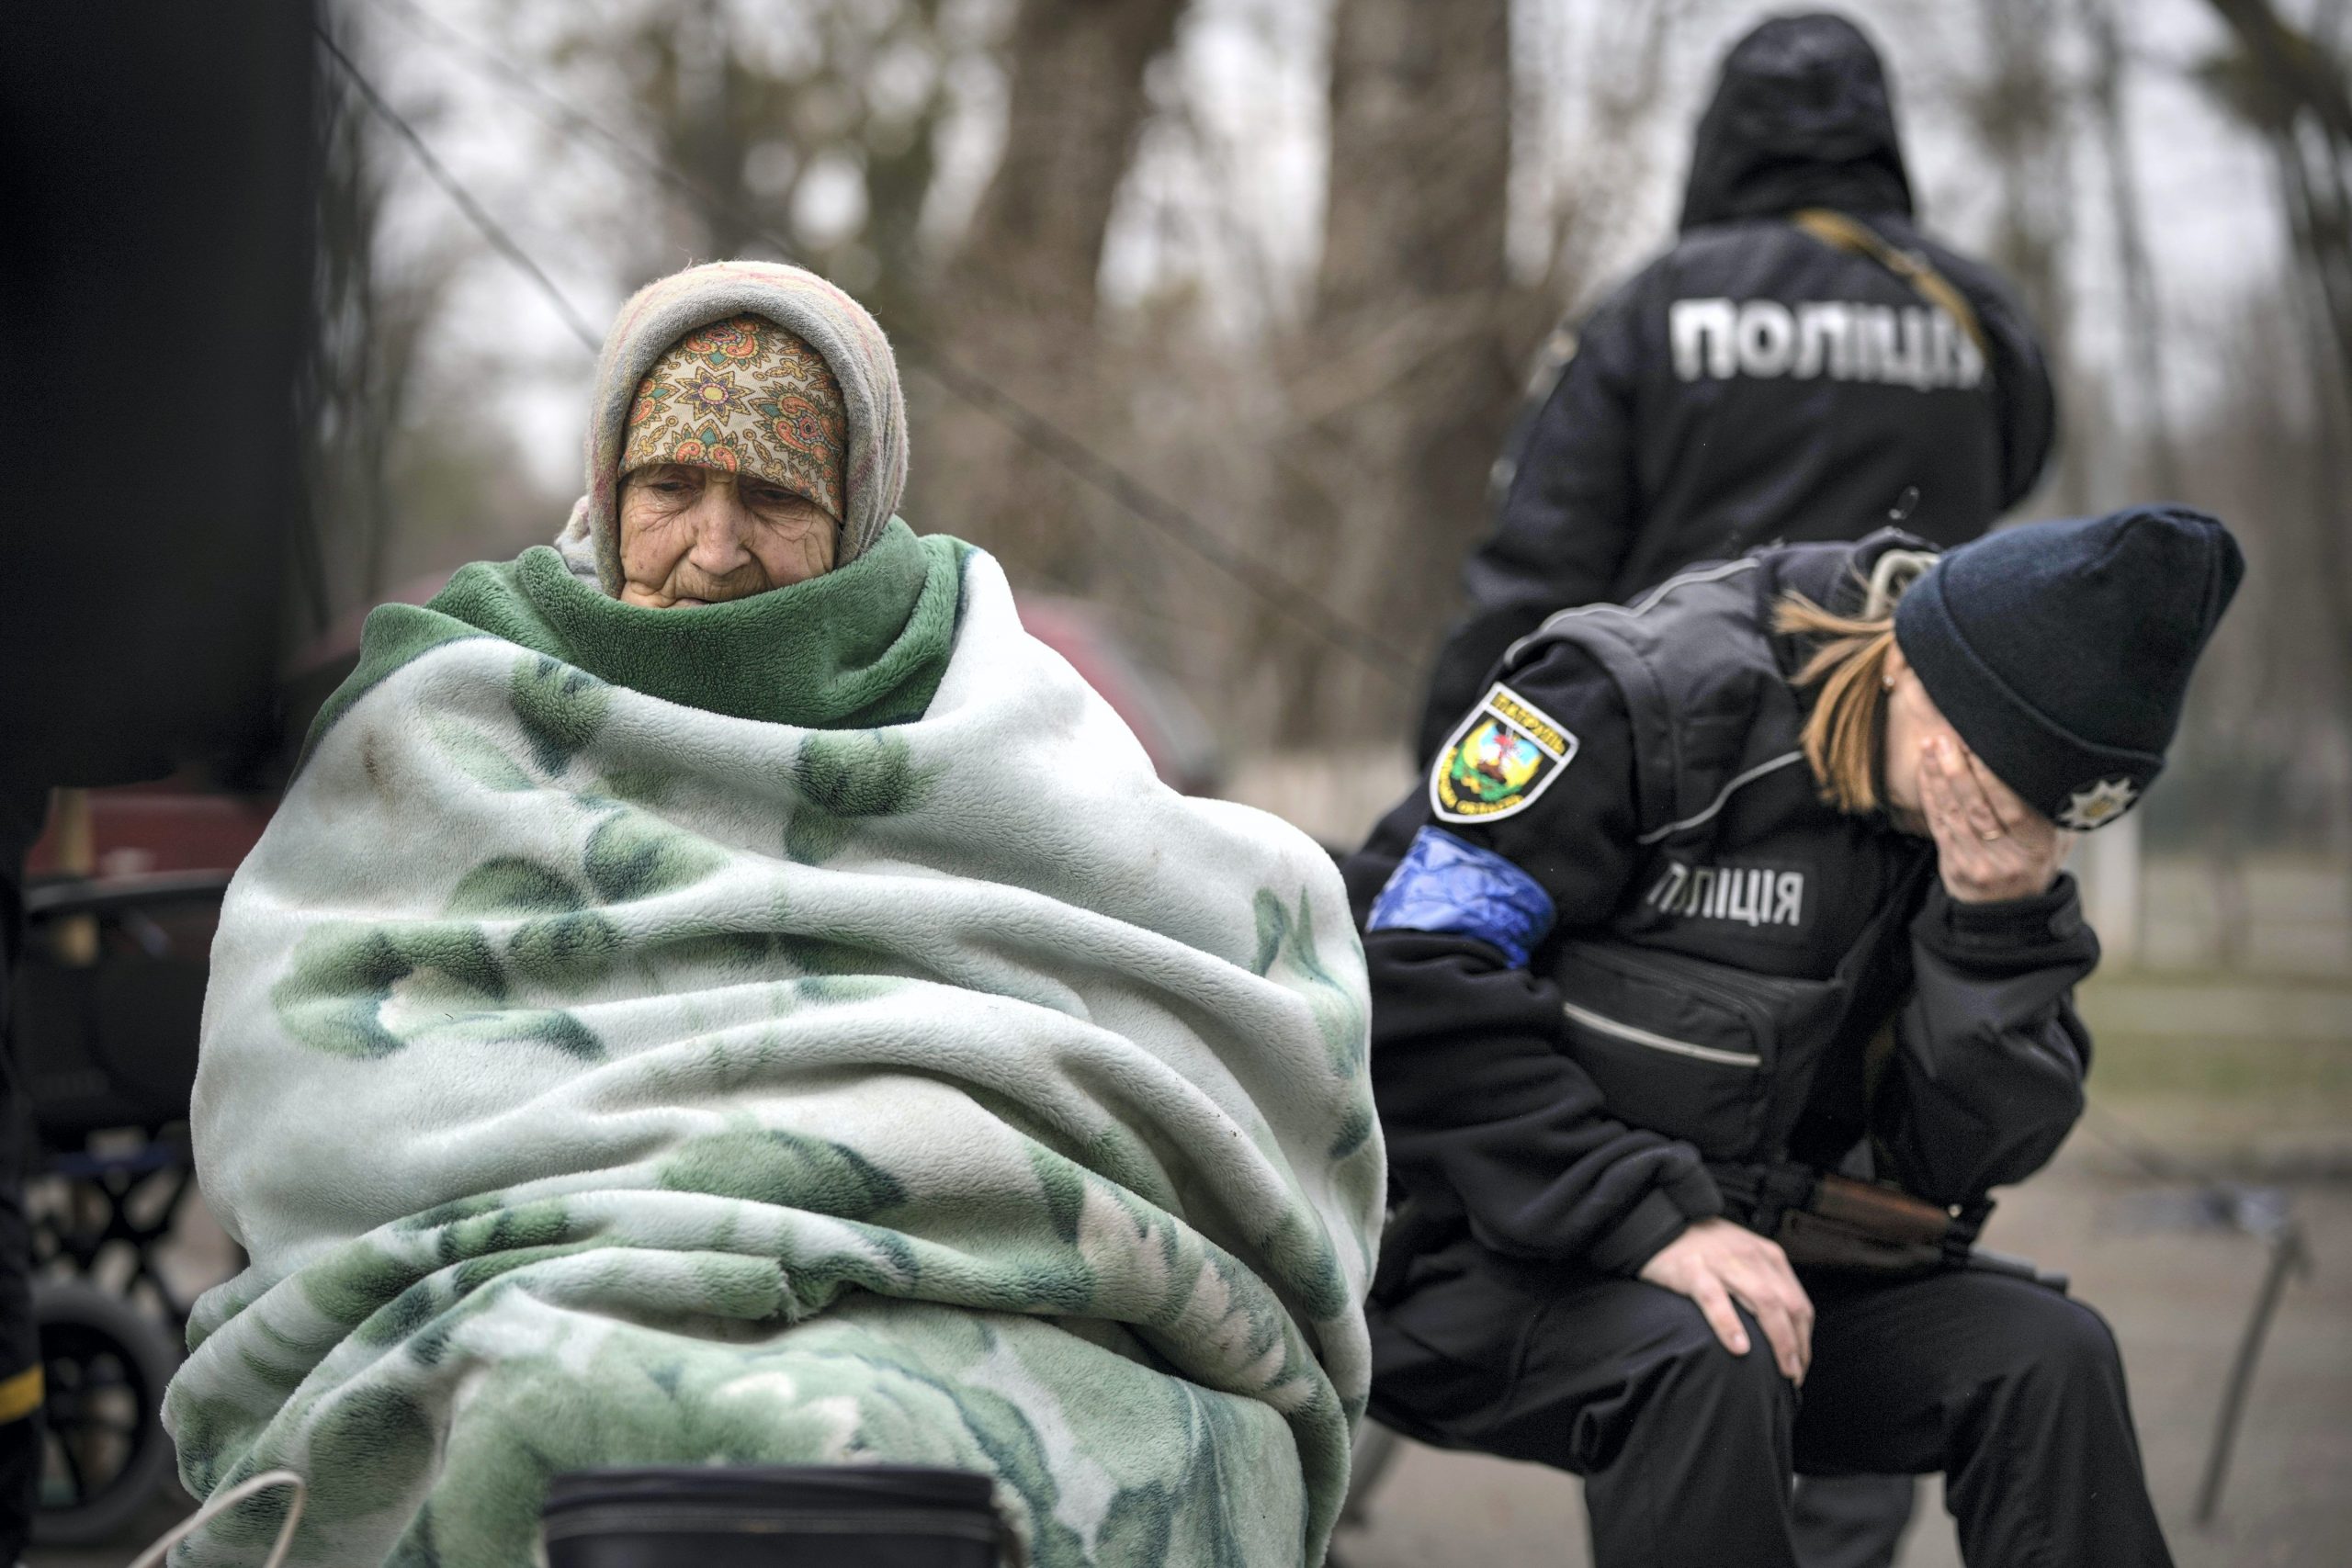 More than 10 million citizens fled Ukraine since start of war, says UN